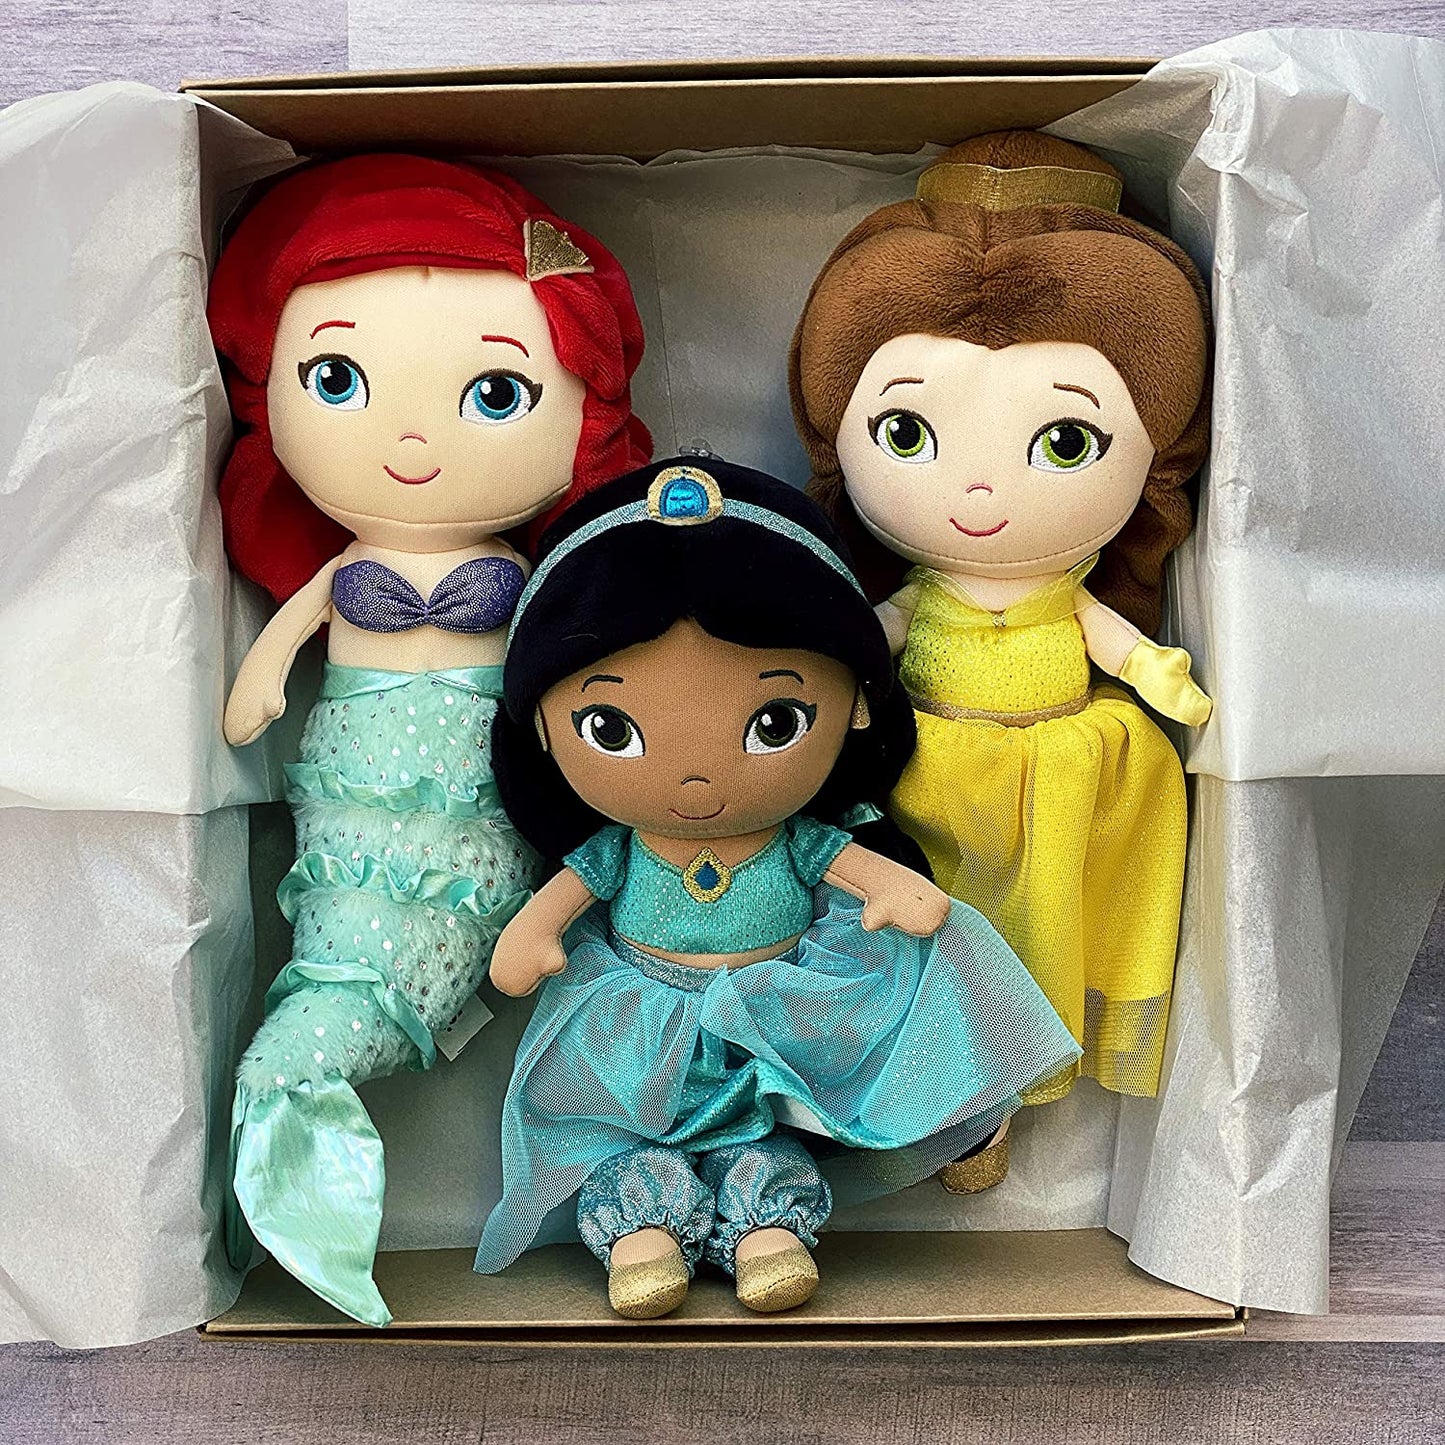 KIDS PREFERRED Disney Princess Jasmine 12” Plush Doll with Sounds